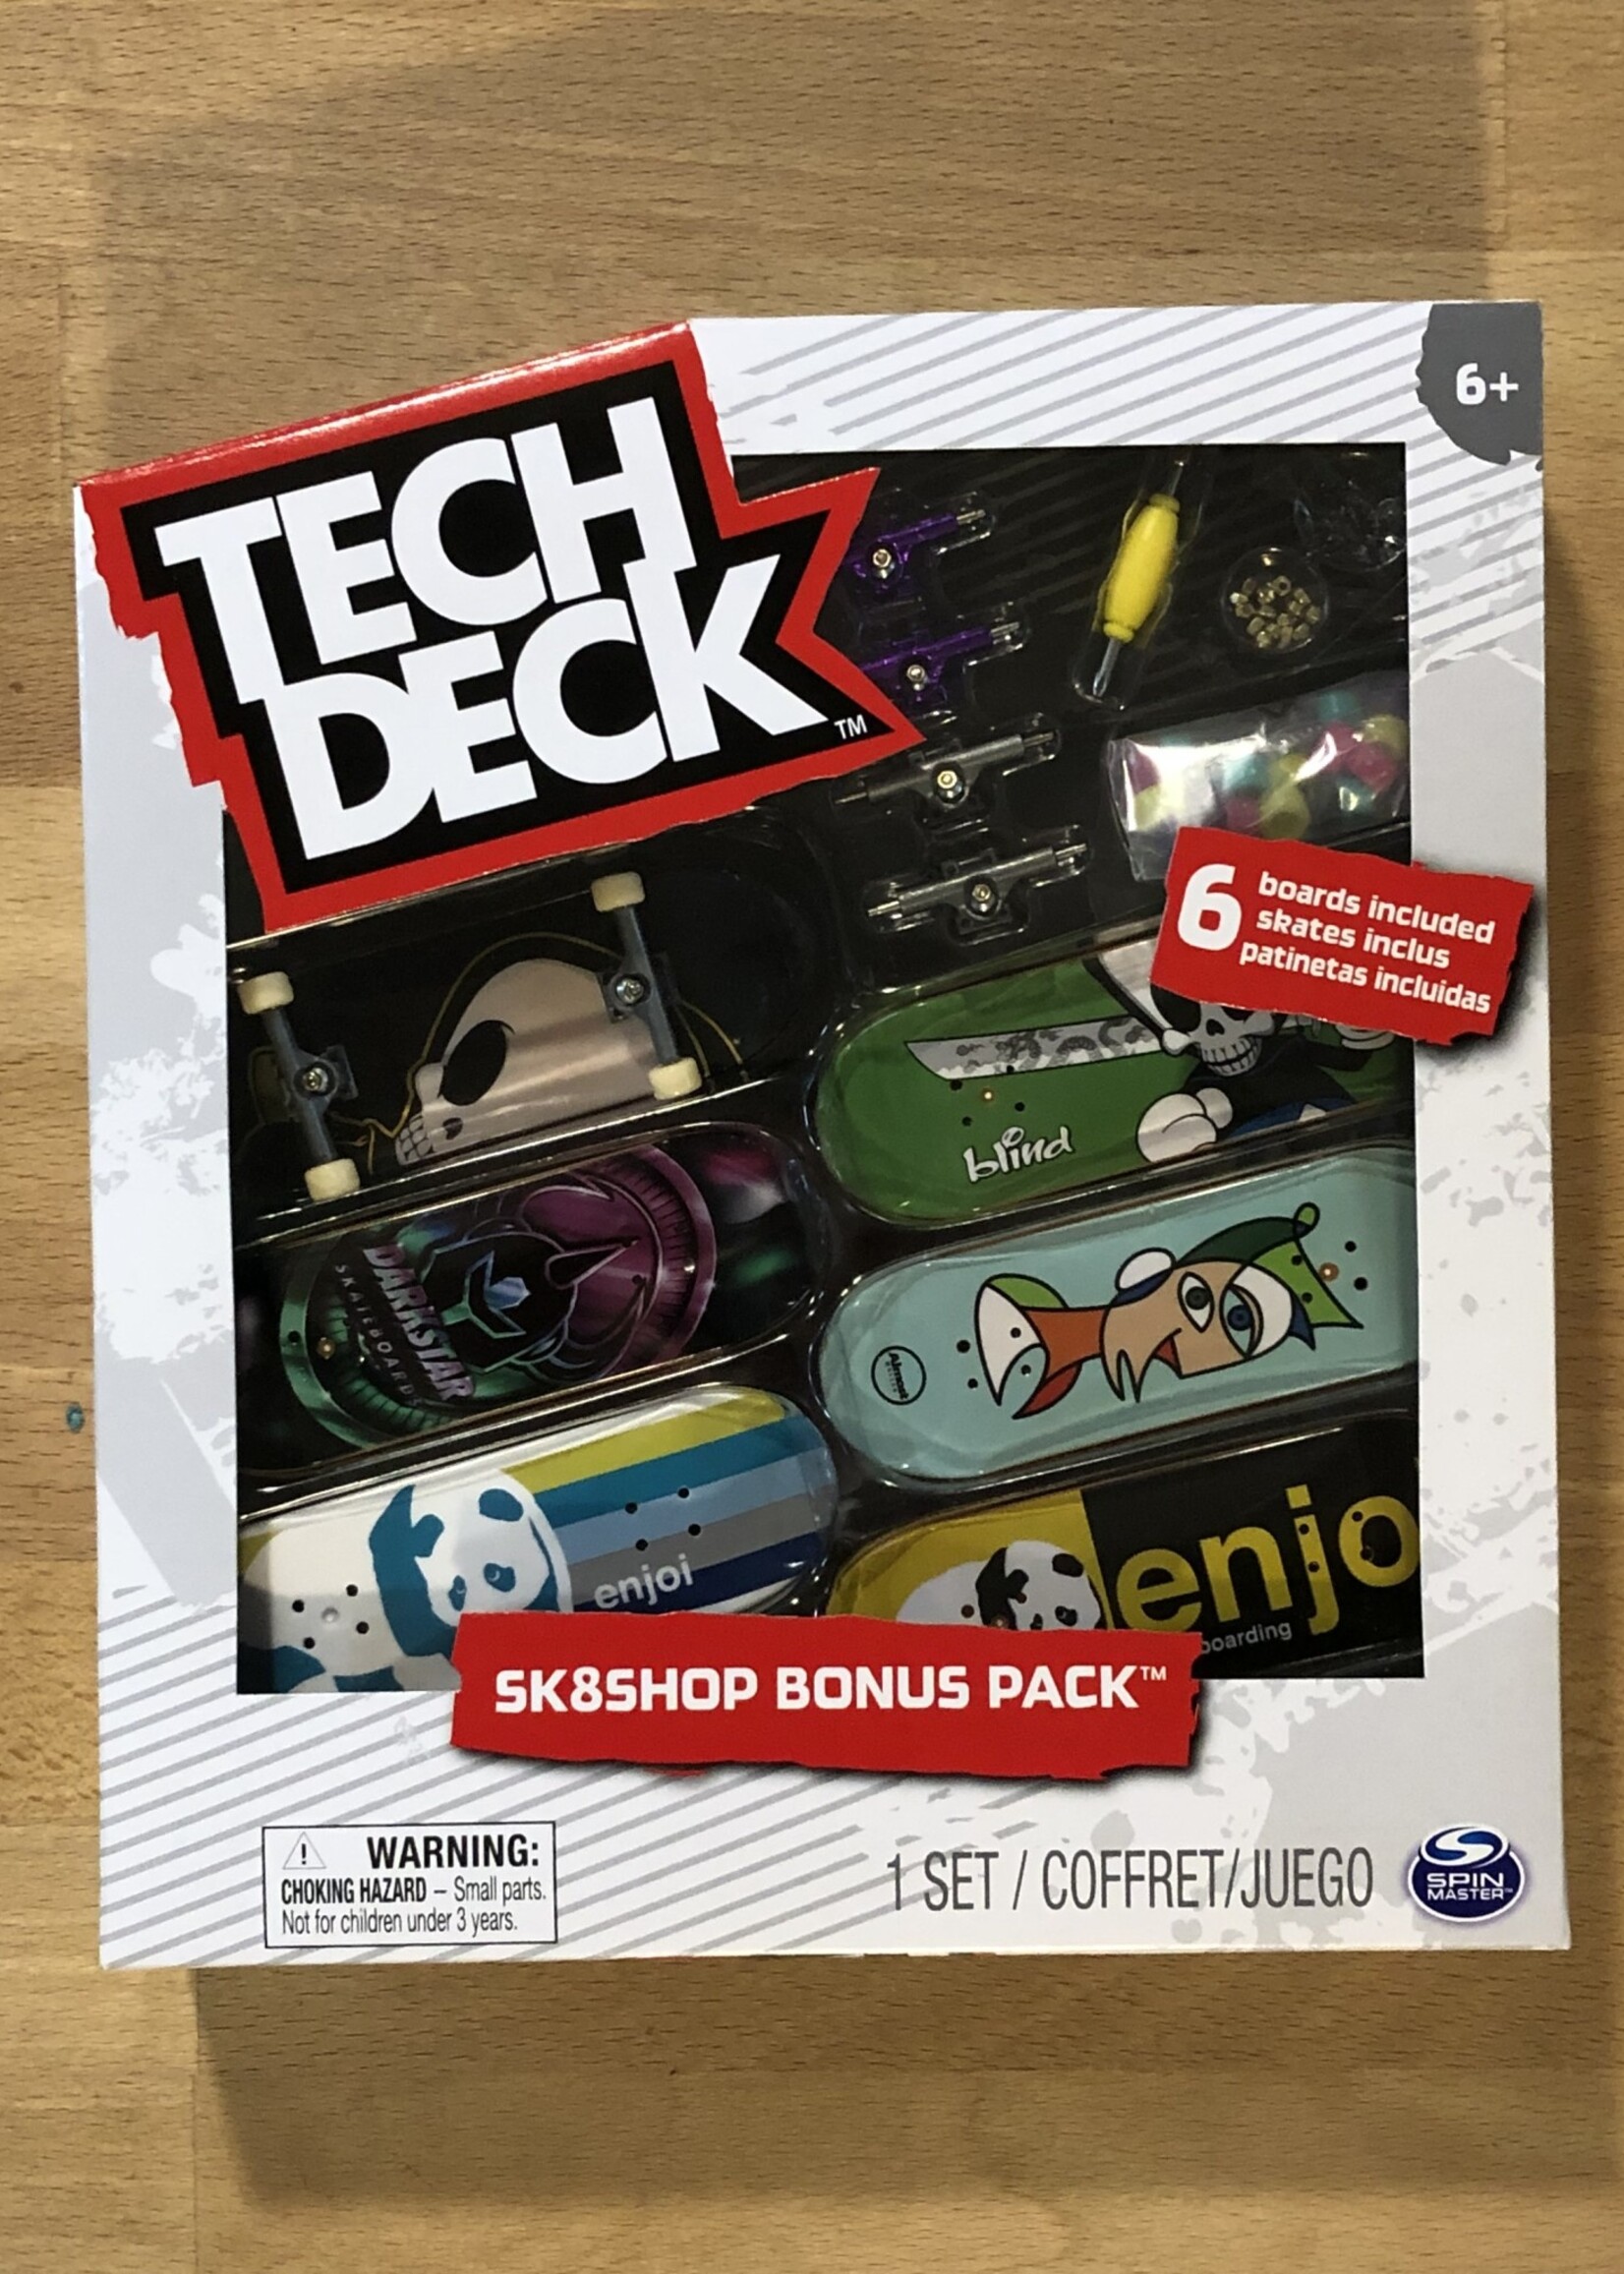 Tech Deck Sk8shop